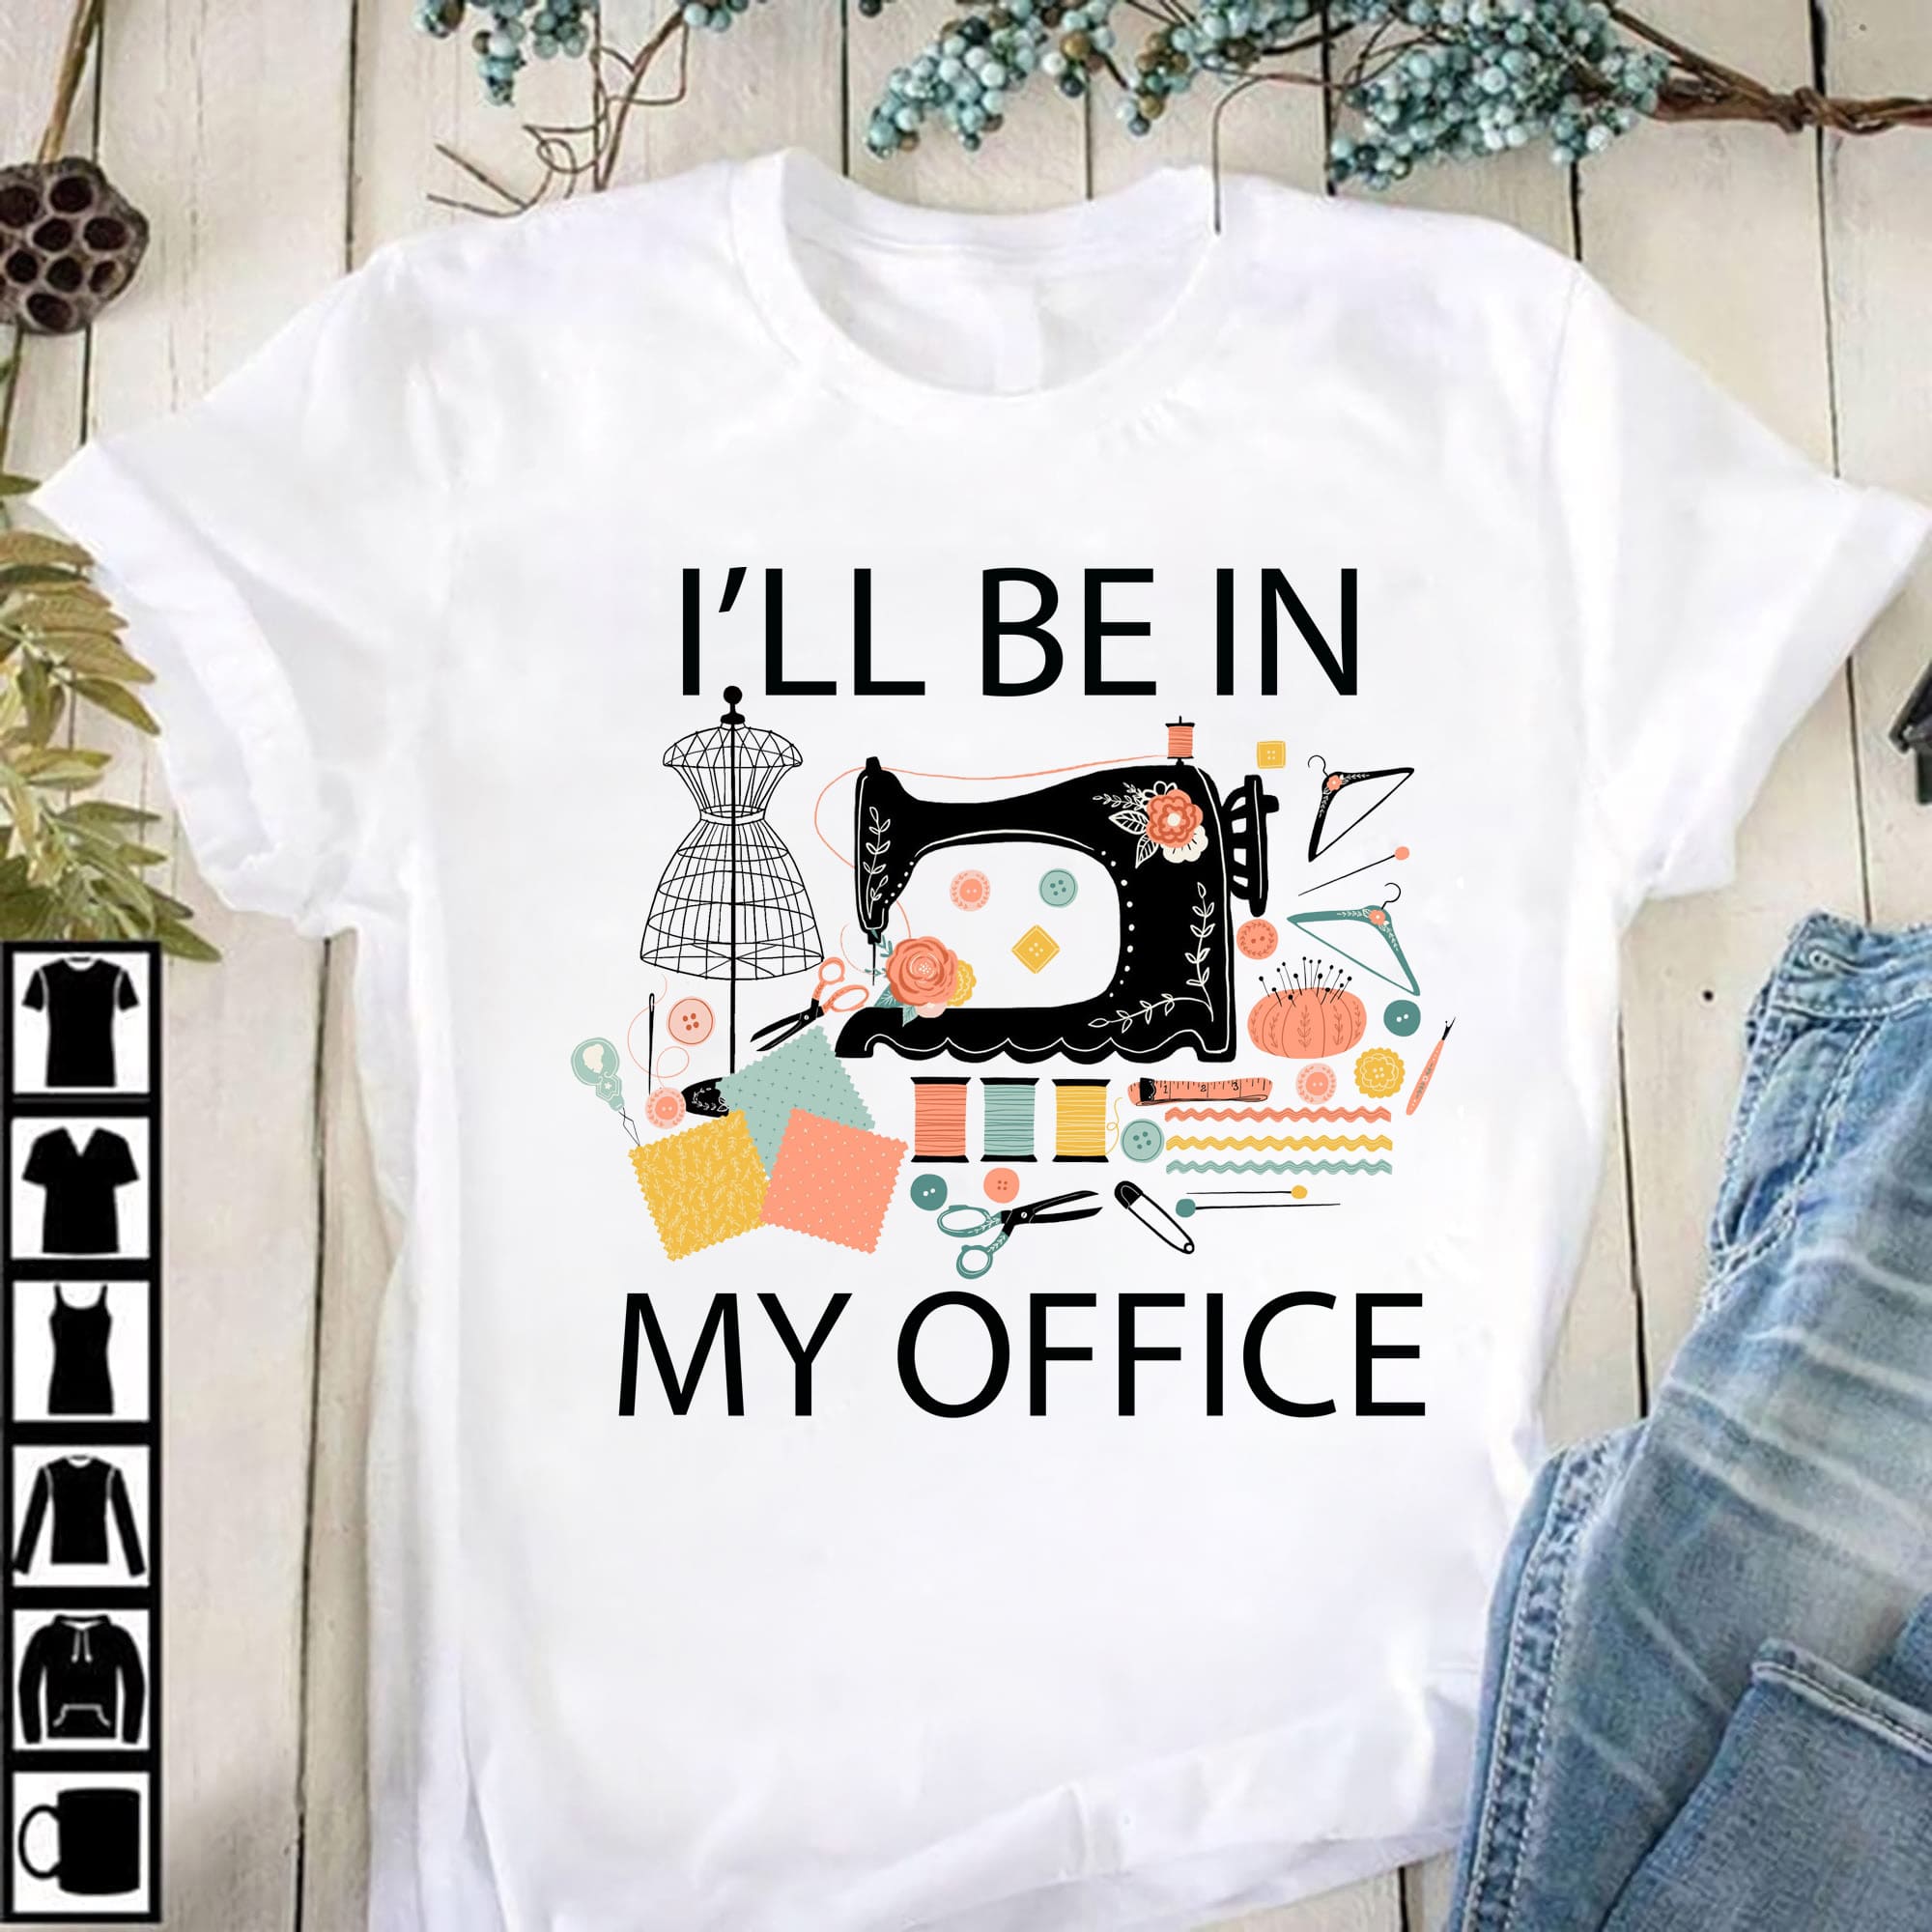 Sewing Machine - I'll be in my office Shirt, Hoodie, Sweatshirt ...